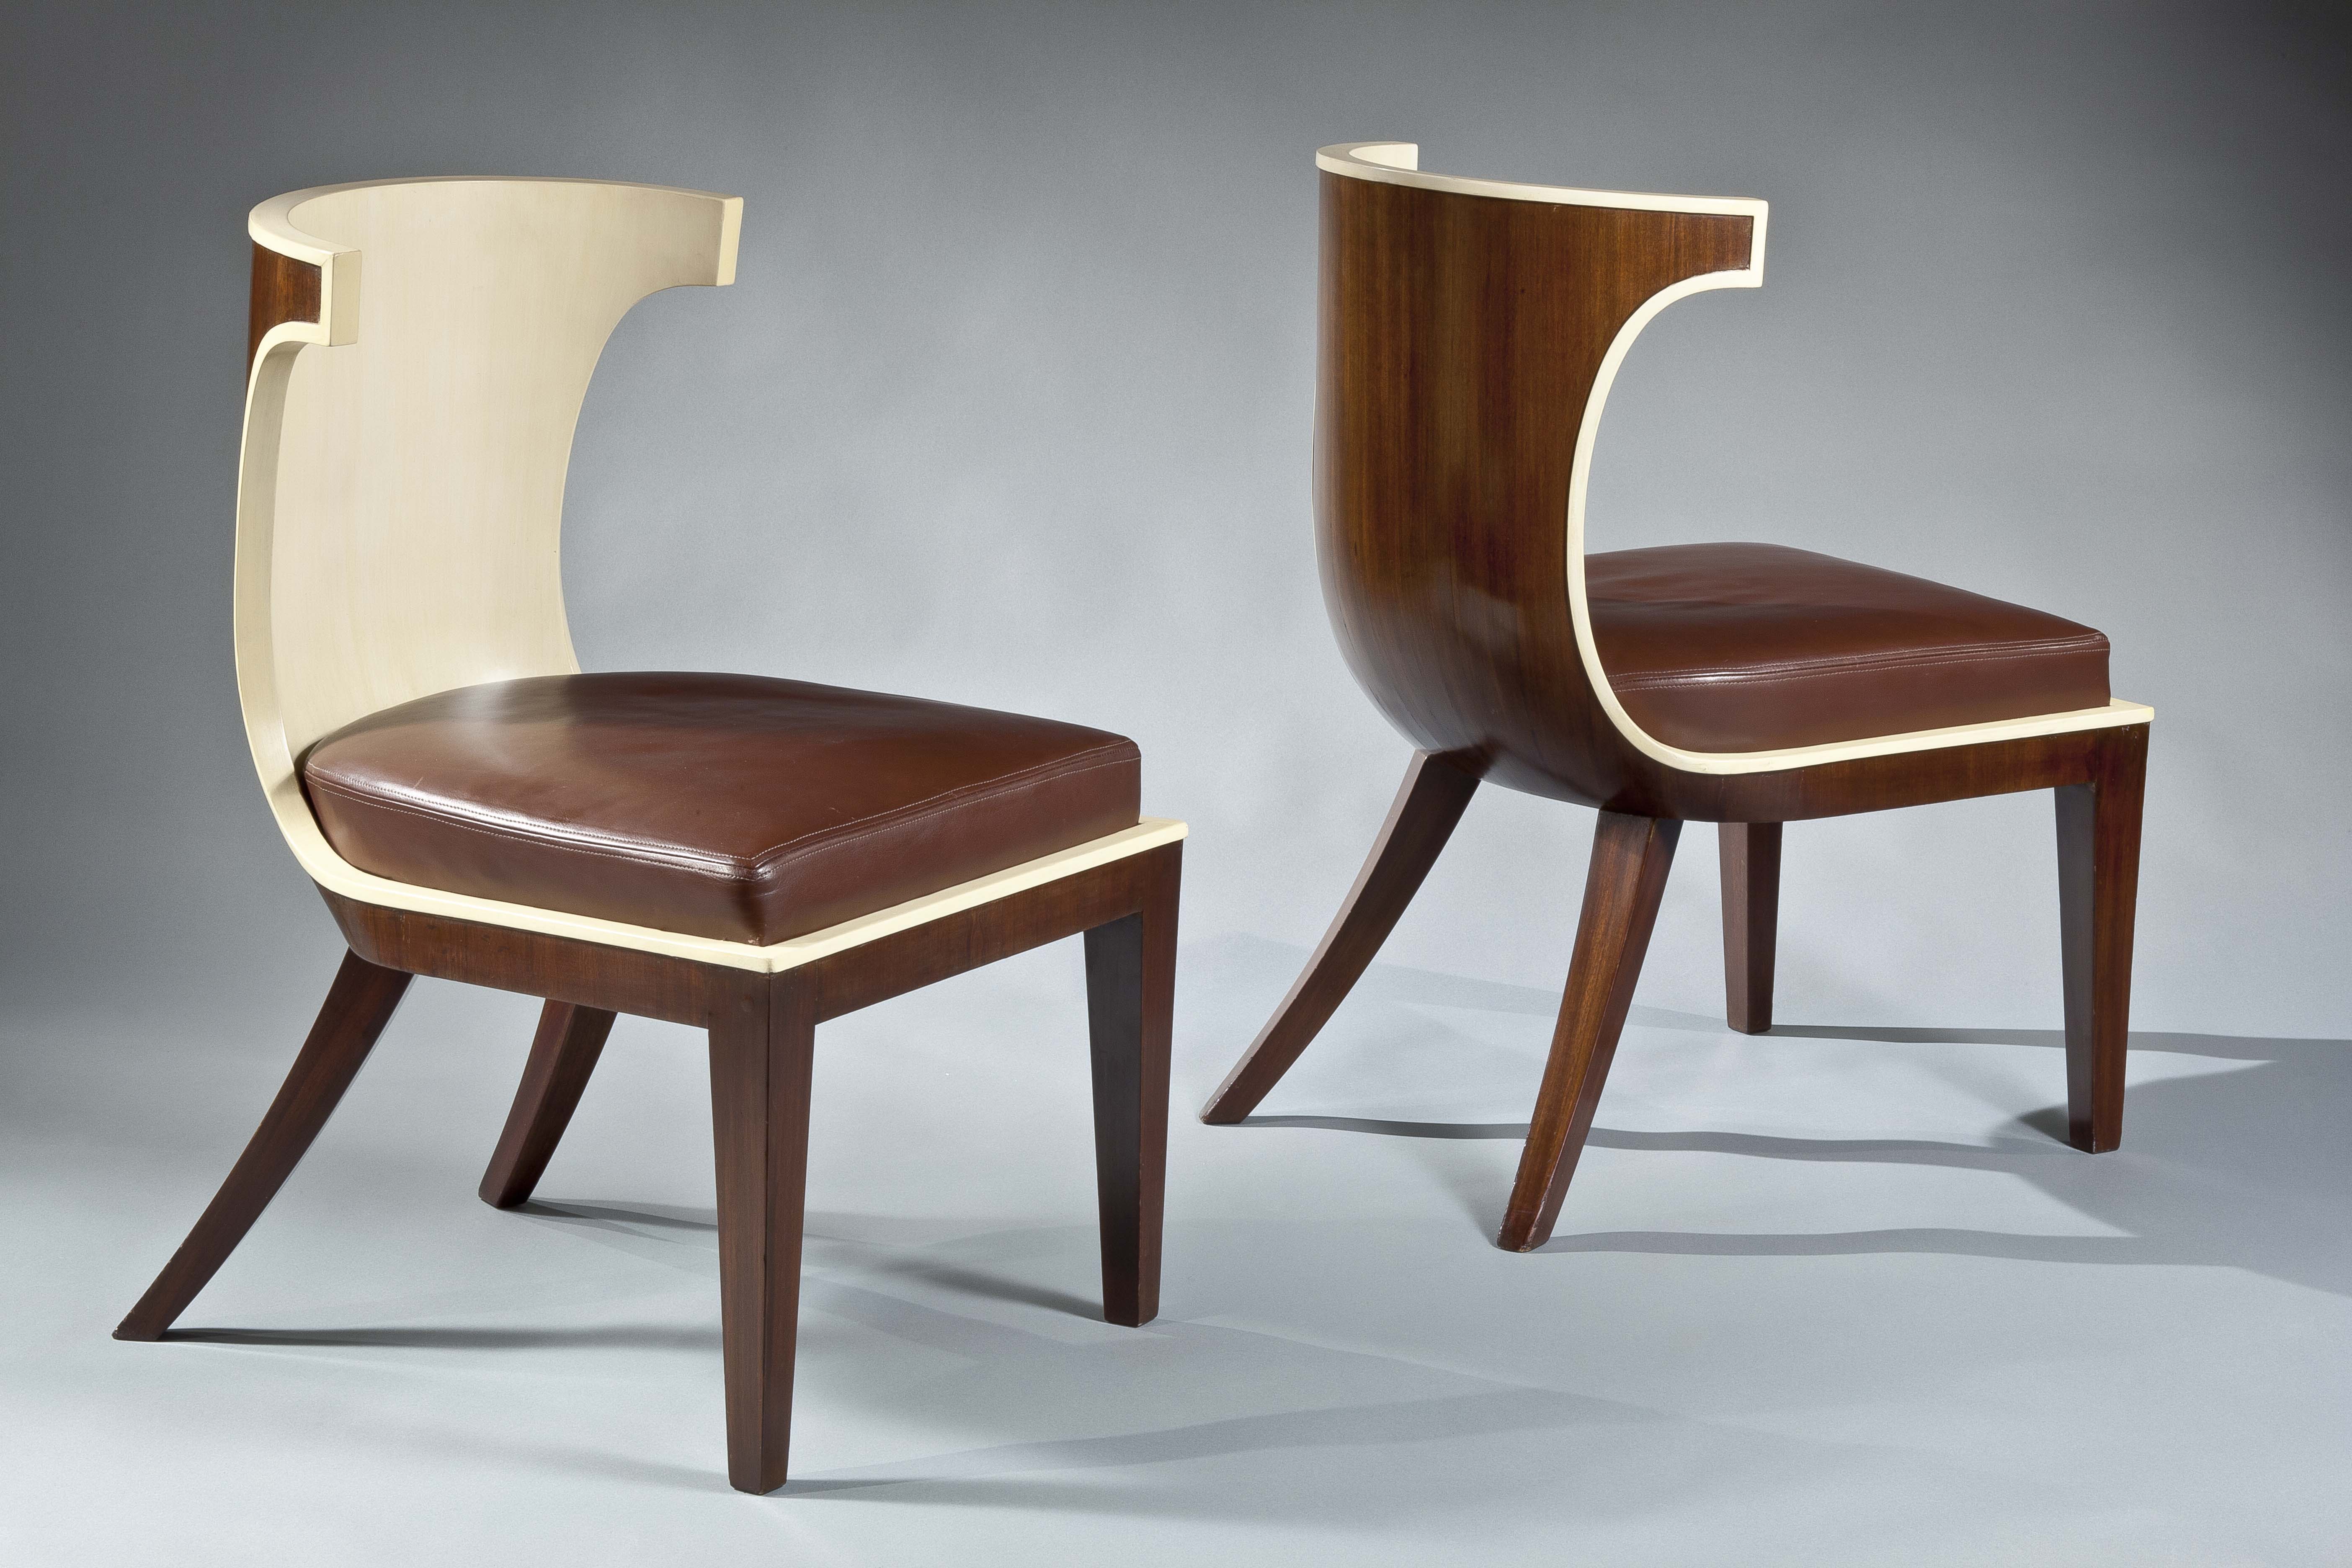 American Art Deco Furniture - Art Deco Design Style: a Simple Guide